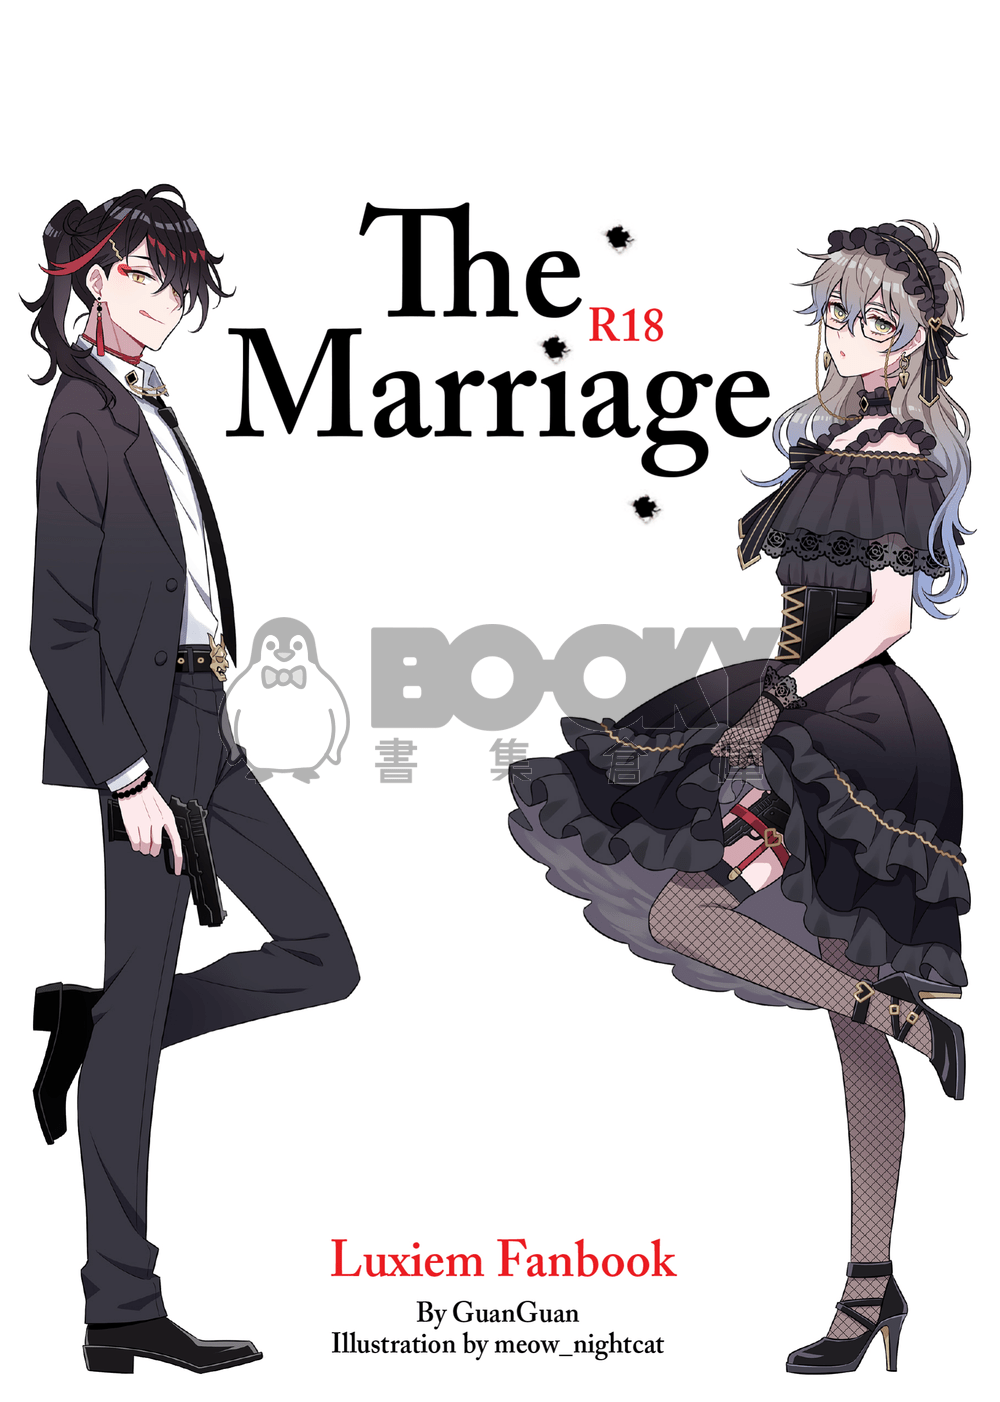 The Marriage 試閱圖片